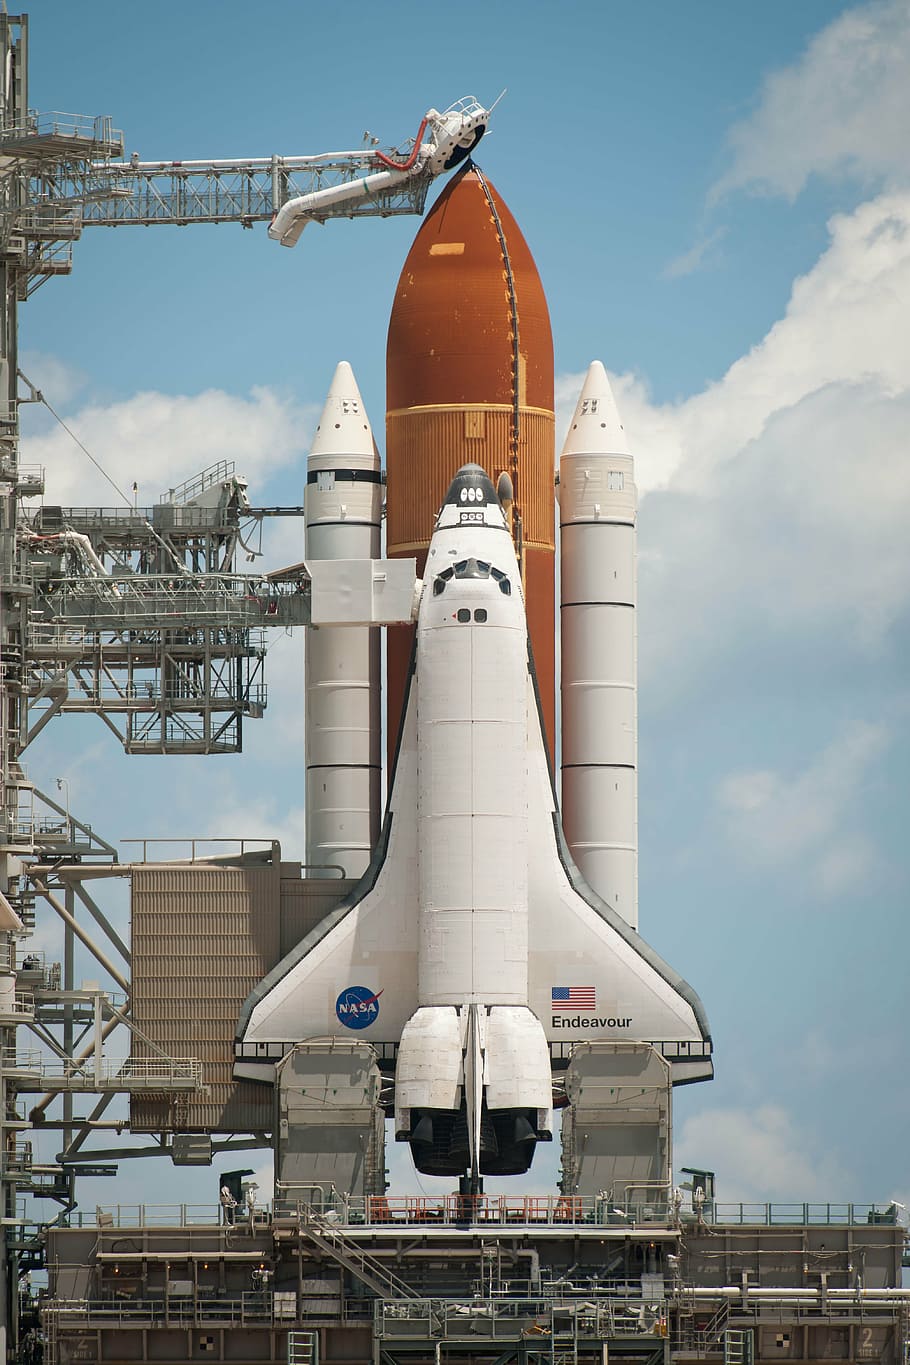 brown, white, space rocket, clouds, space shuttle, endeavour, shuttle, space, pre-flight, launch